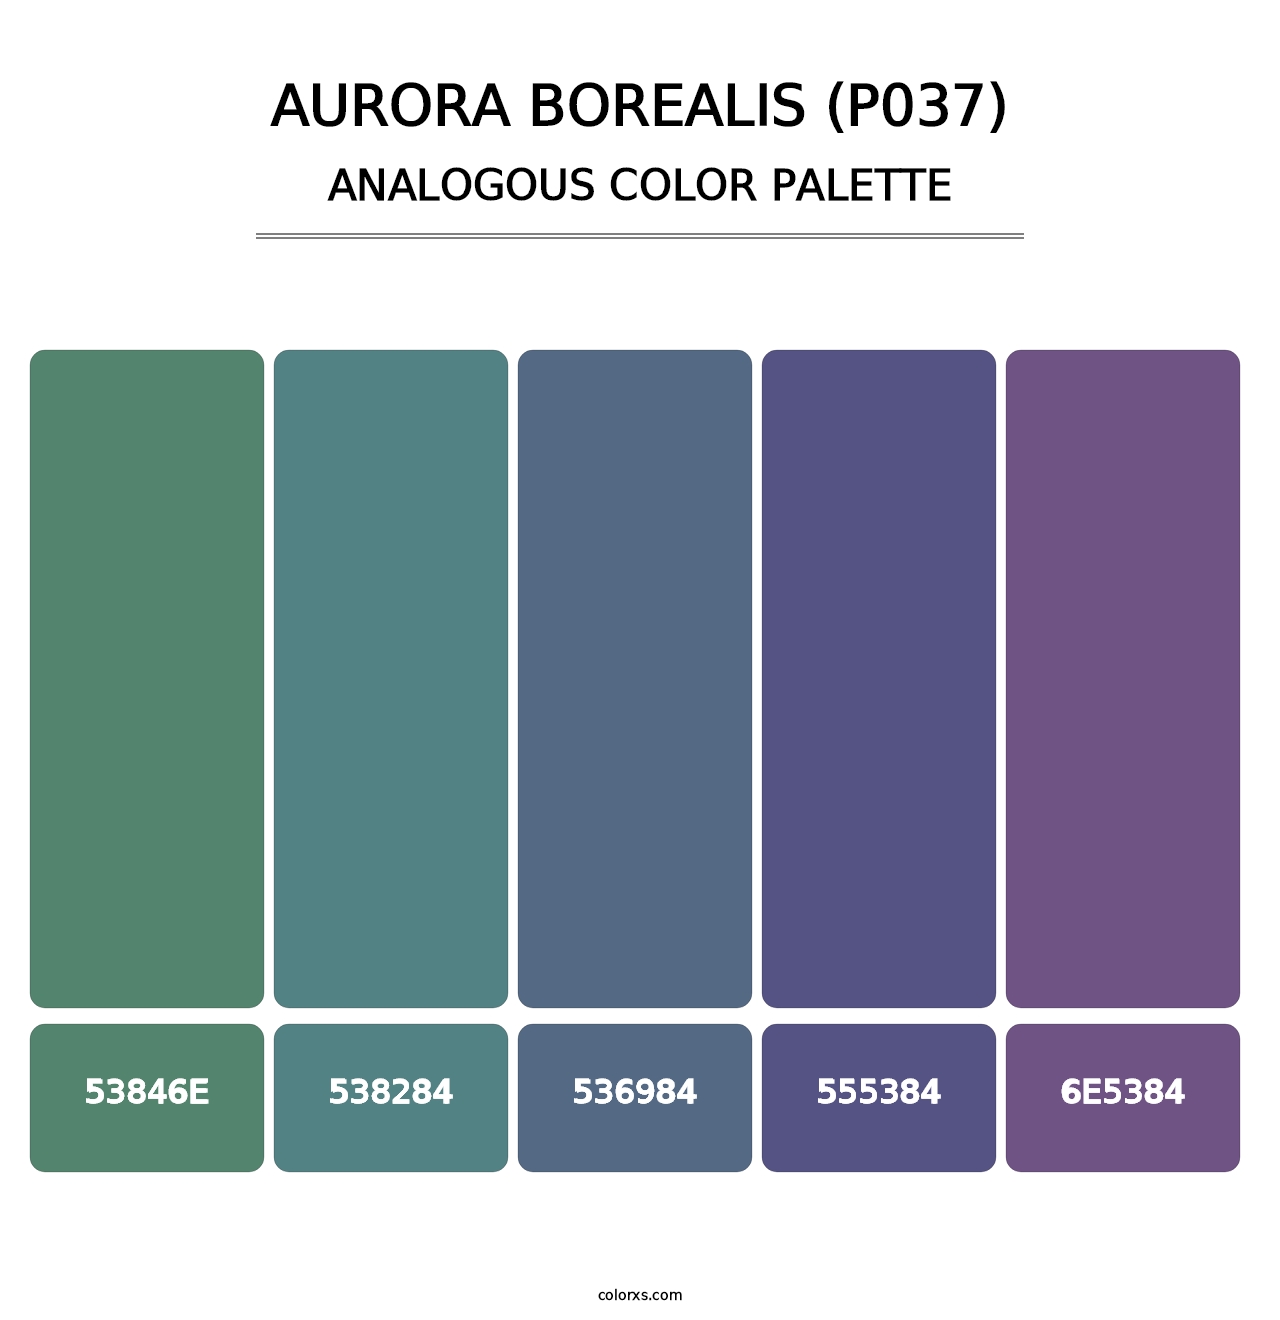 Aurora Borealis (P037) - Analogous Color Palette